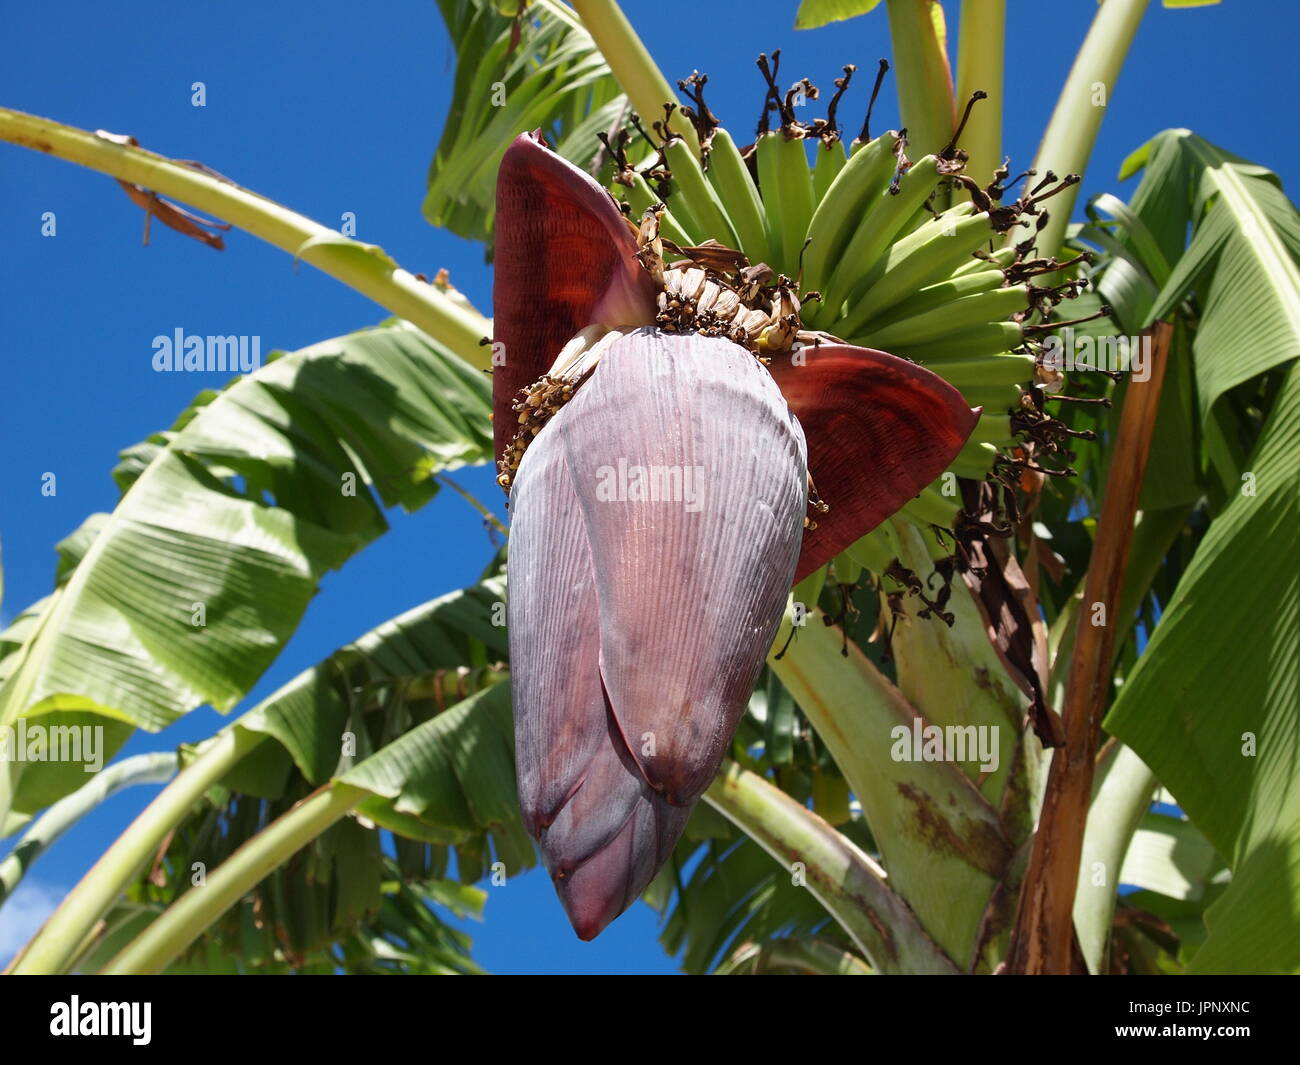 Banana plant flower and green bananas growing, Anguilla, BWI. Stock Photo